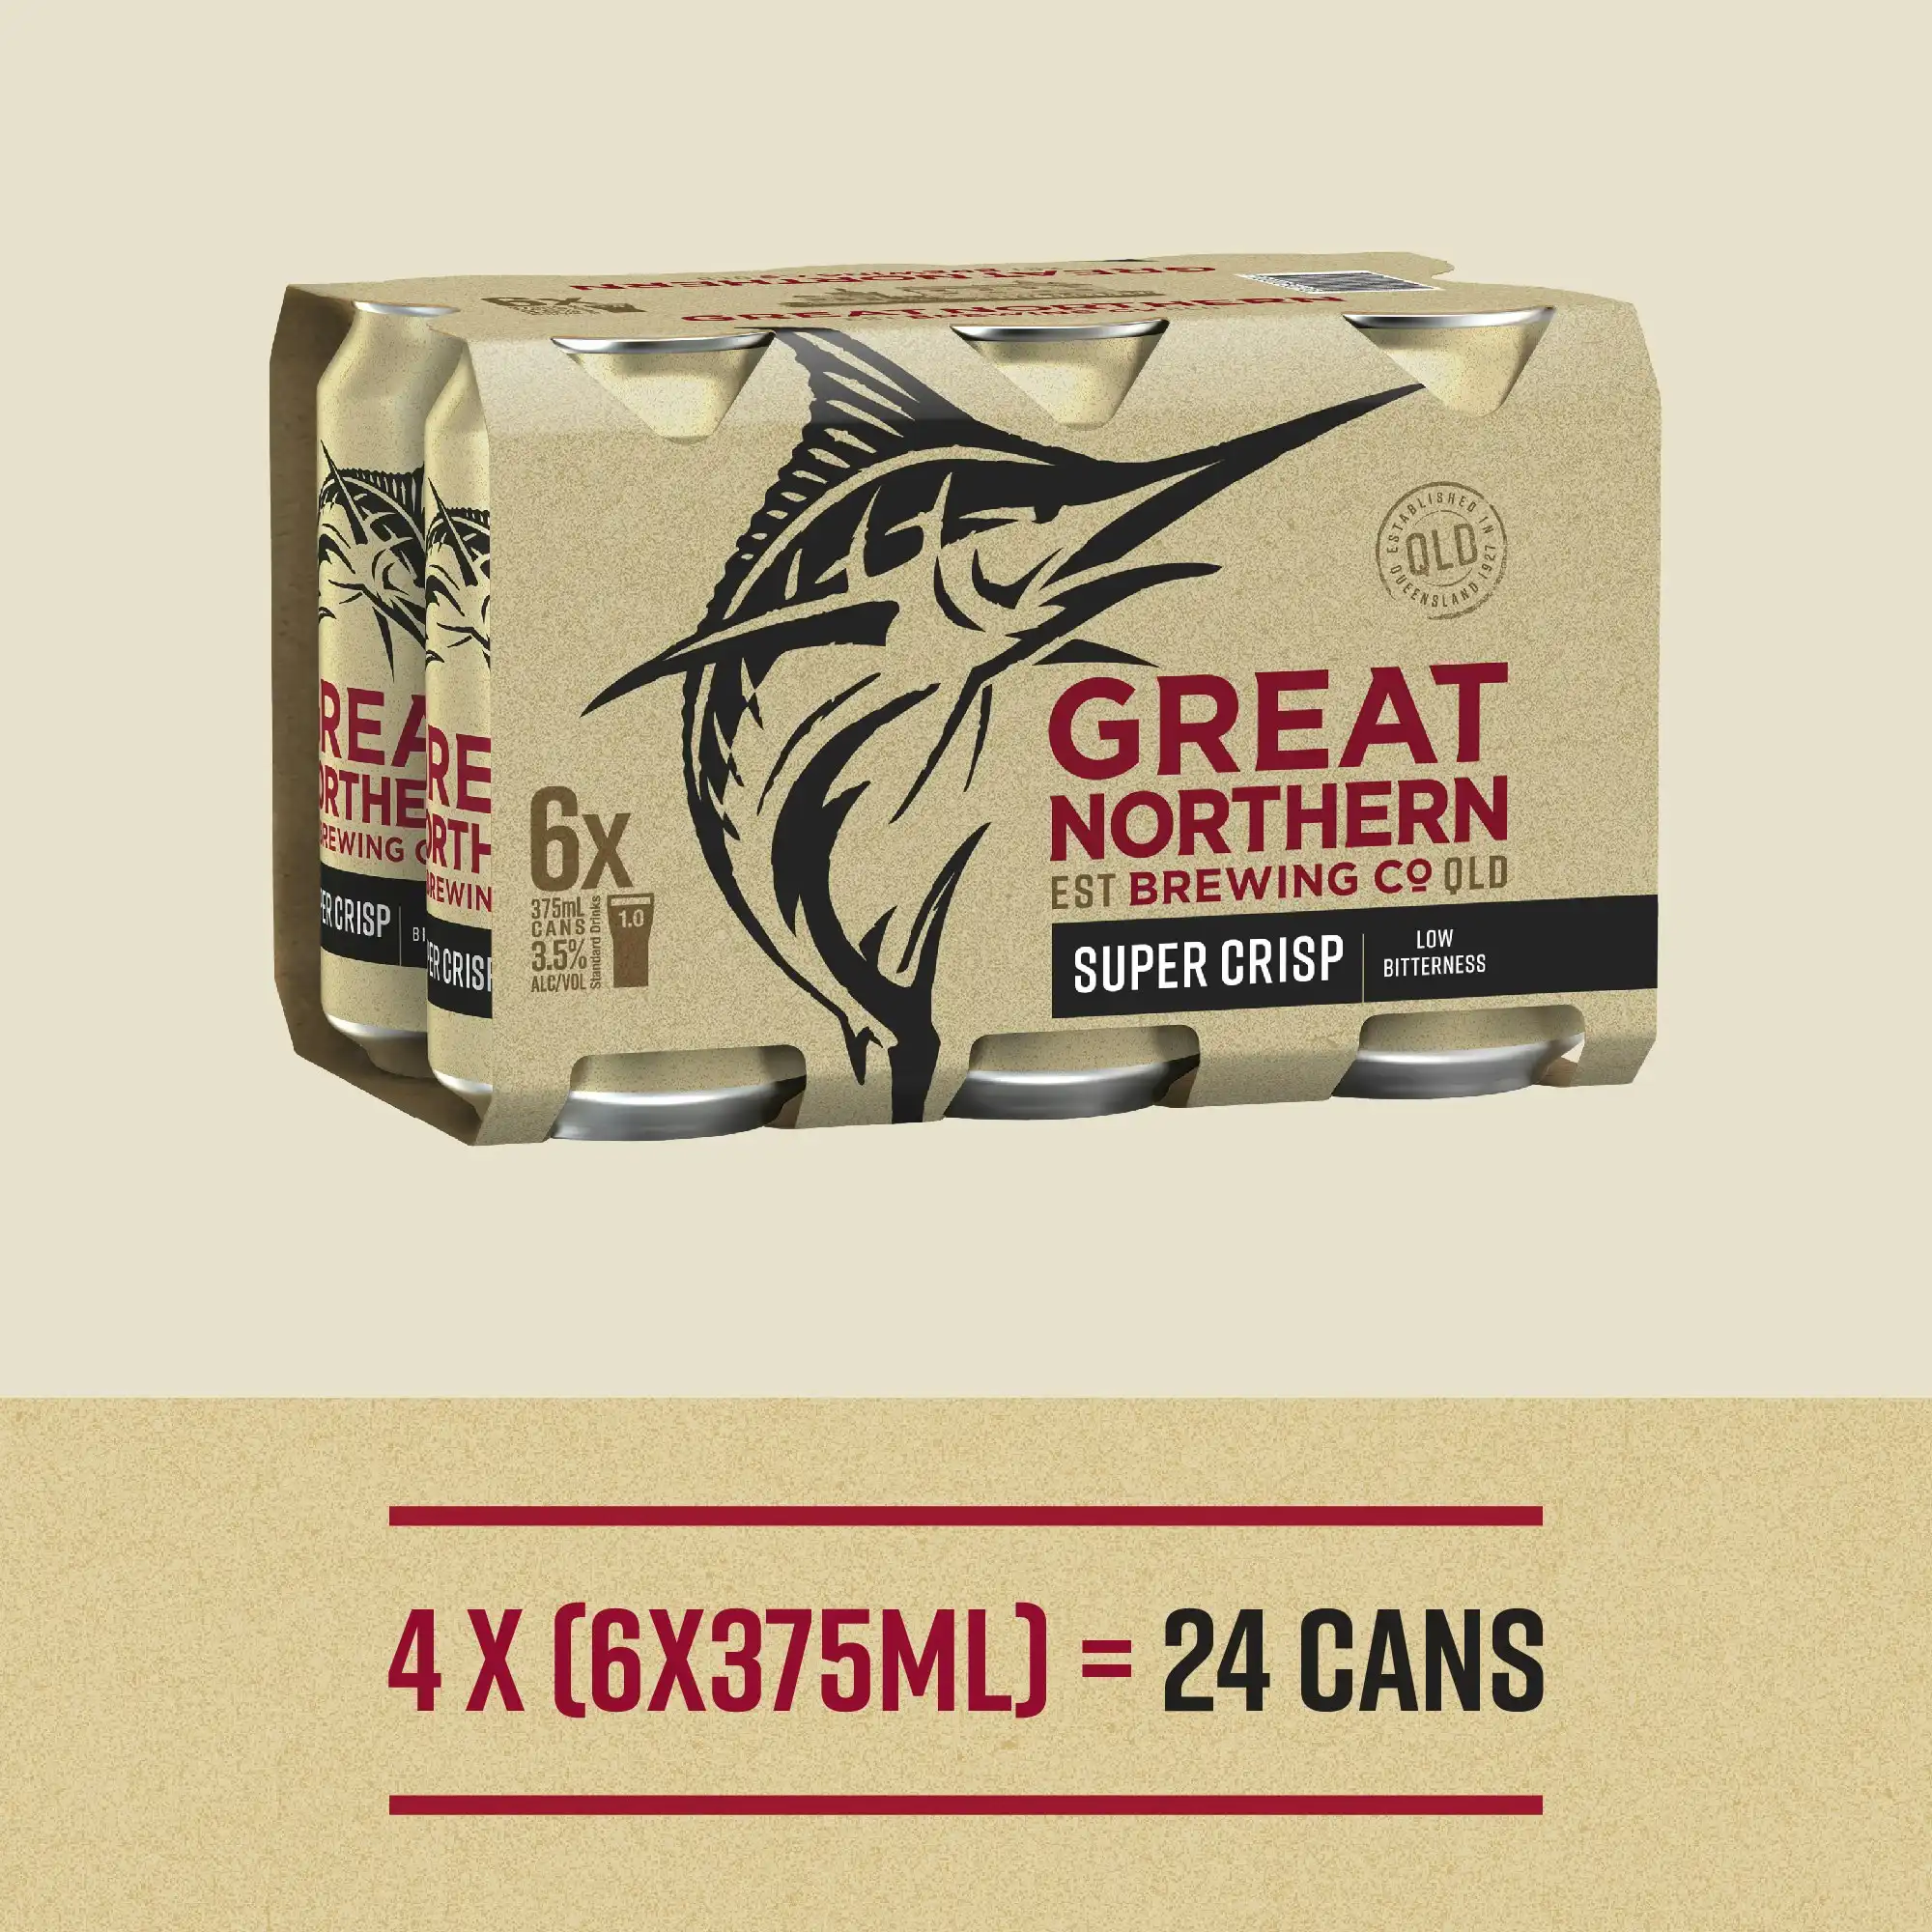 Great Northern Super Crisp Lager Beer Case 24 x 375mL Cans